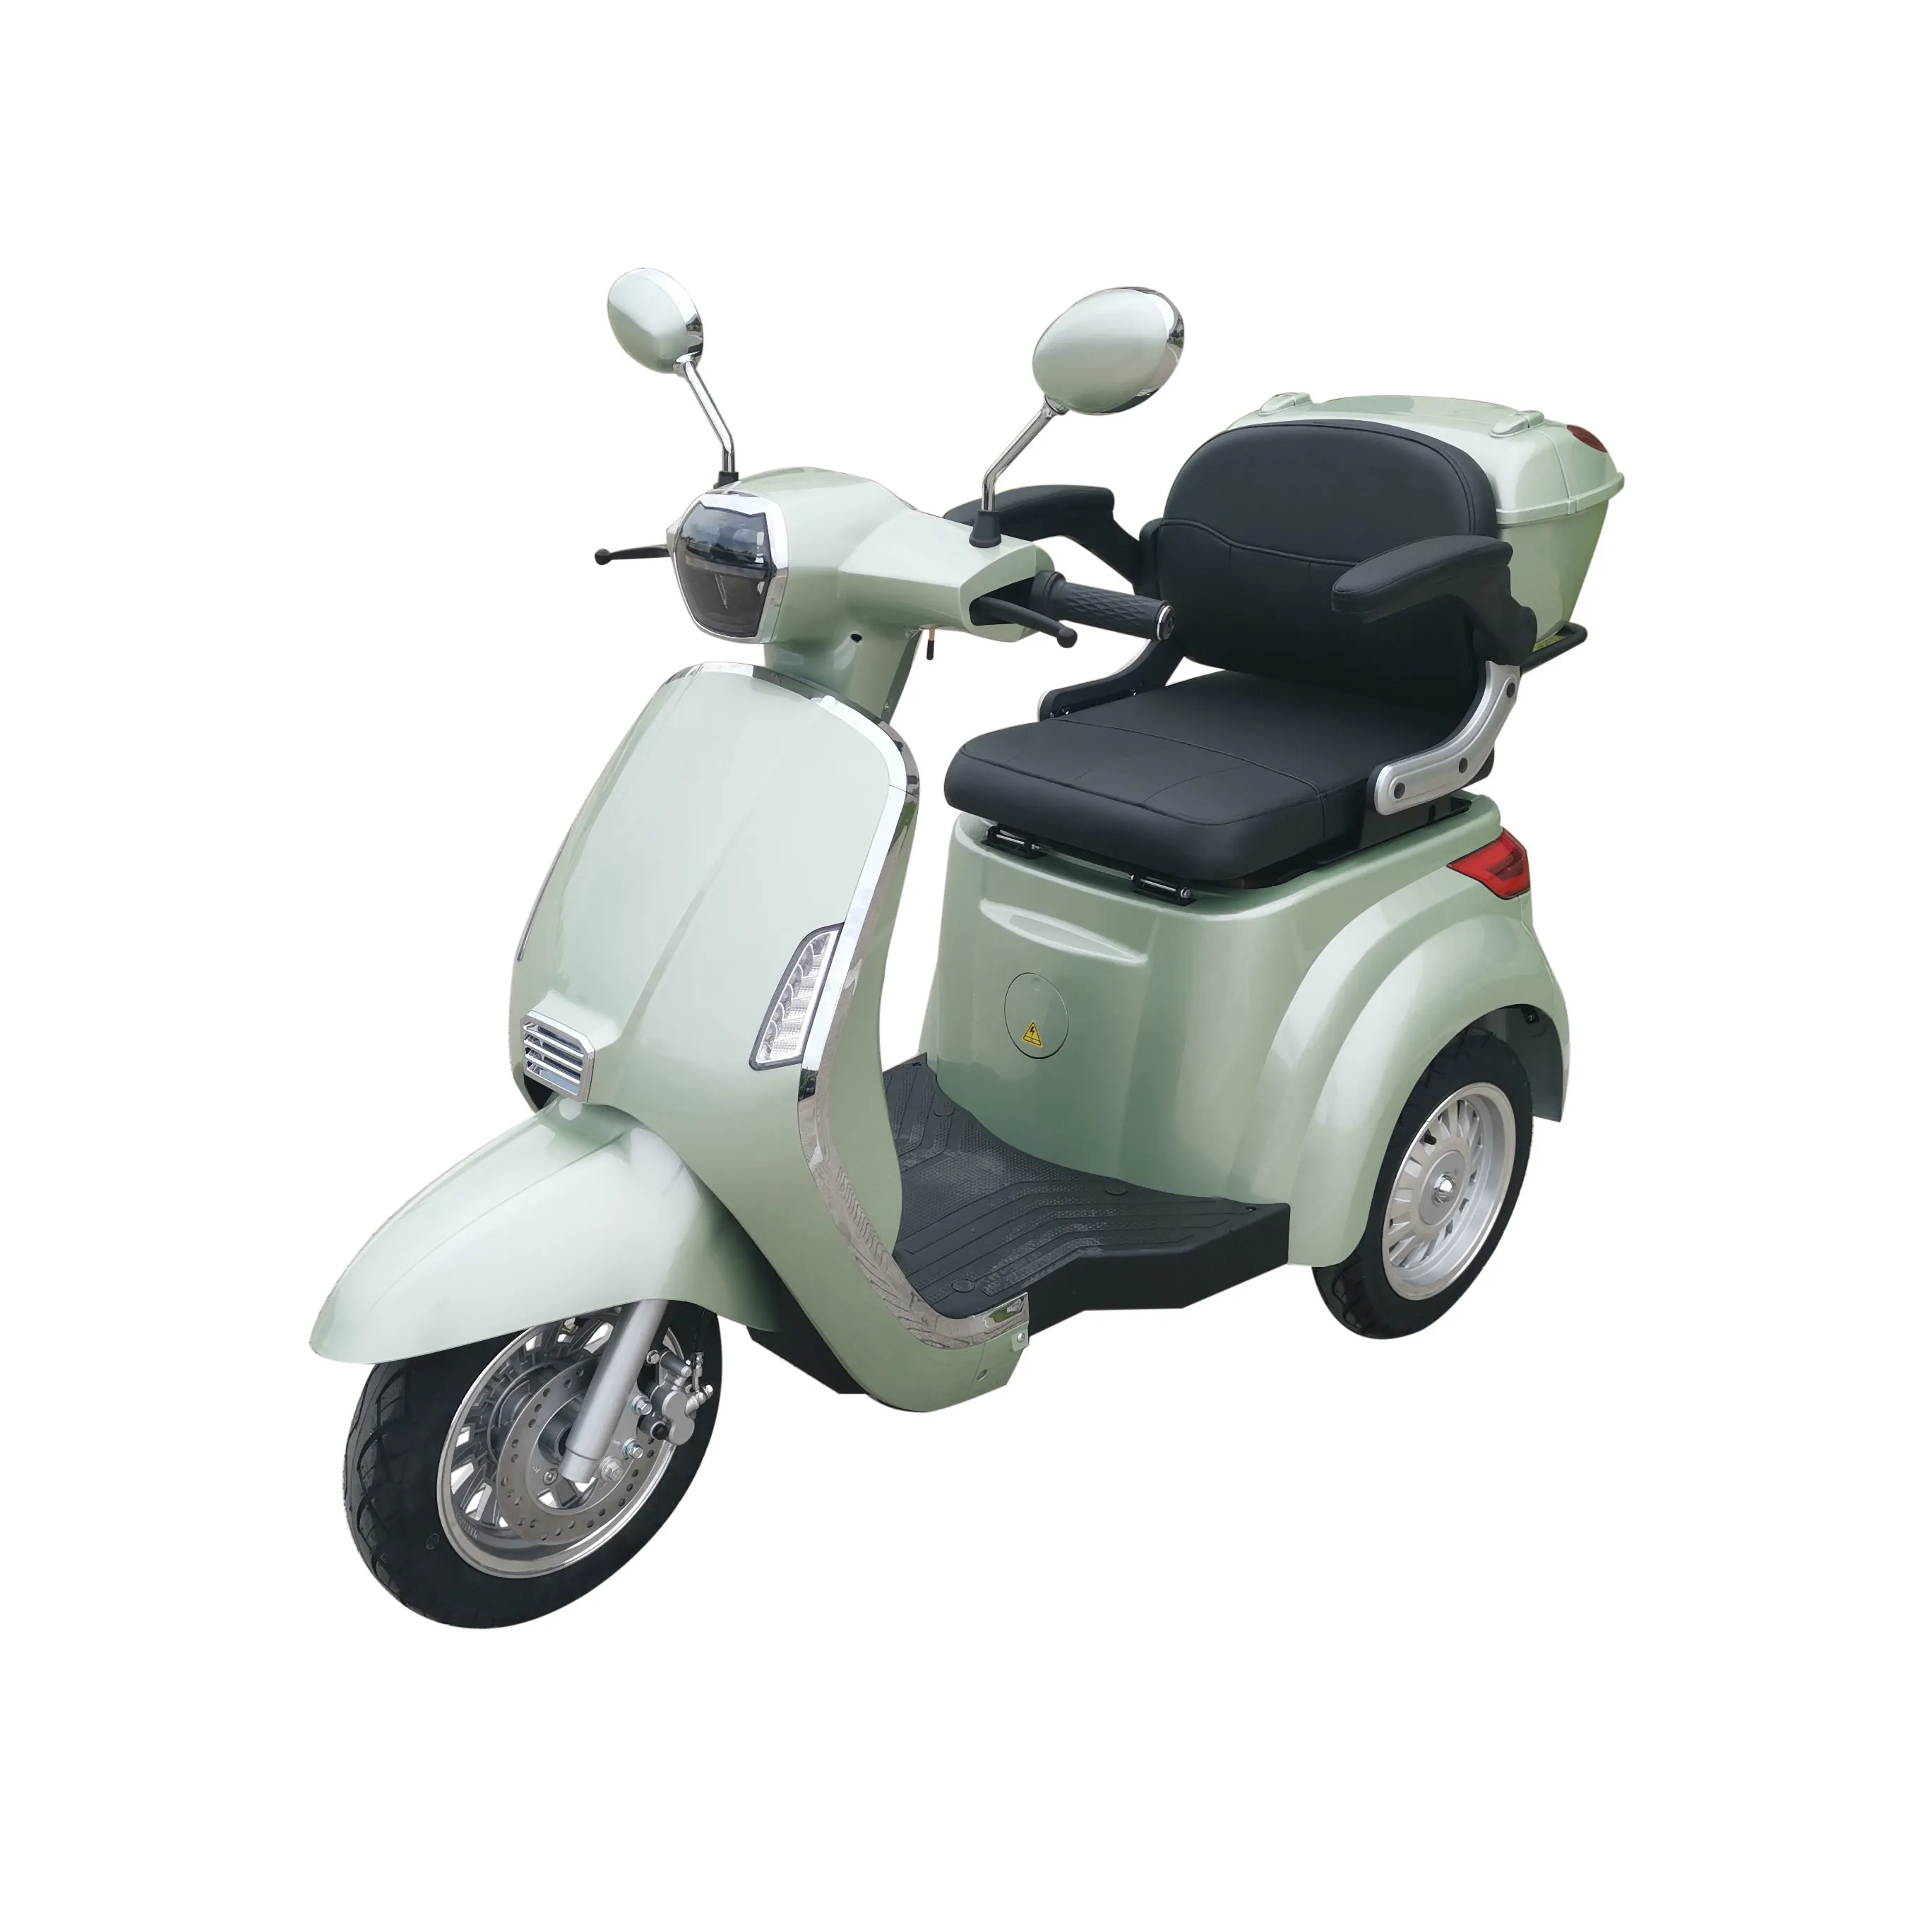 Sepeda Motor Mobilitas Lansia, Sepeda Motor Tiga Roda Listrik 800W 25Km/Jam 60V Baterai